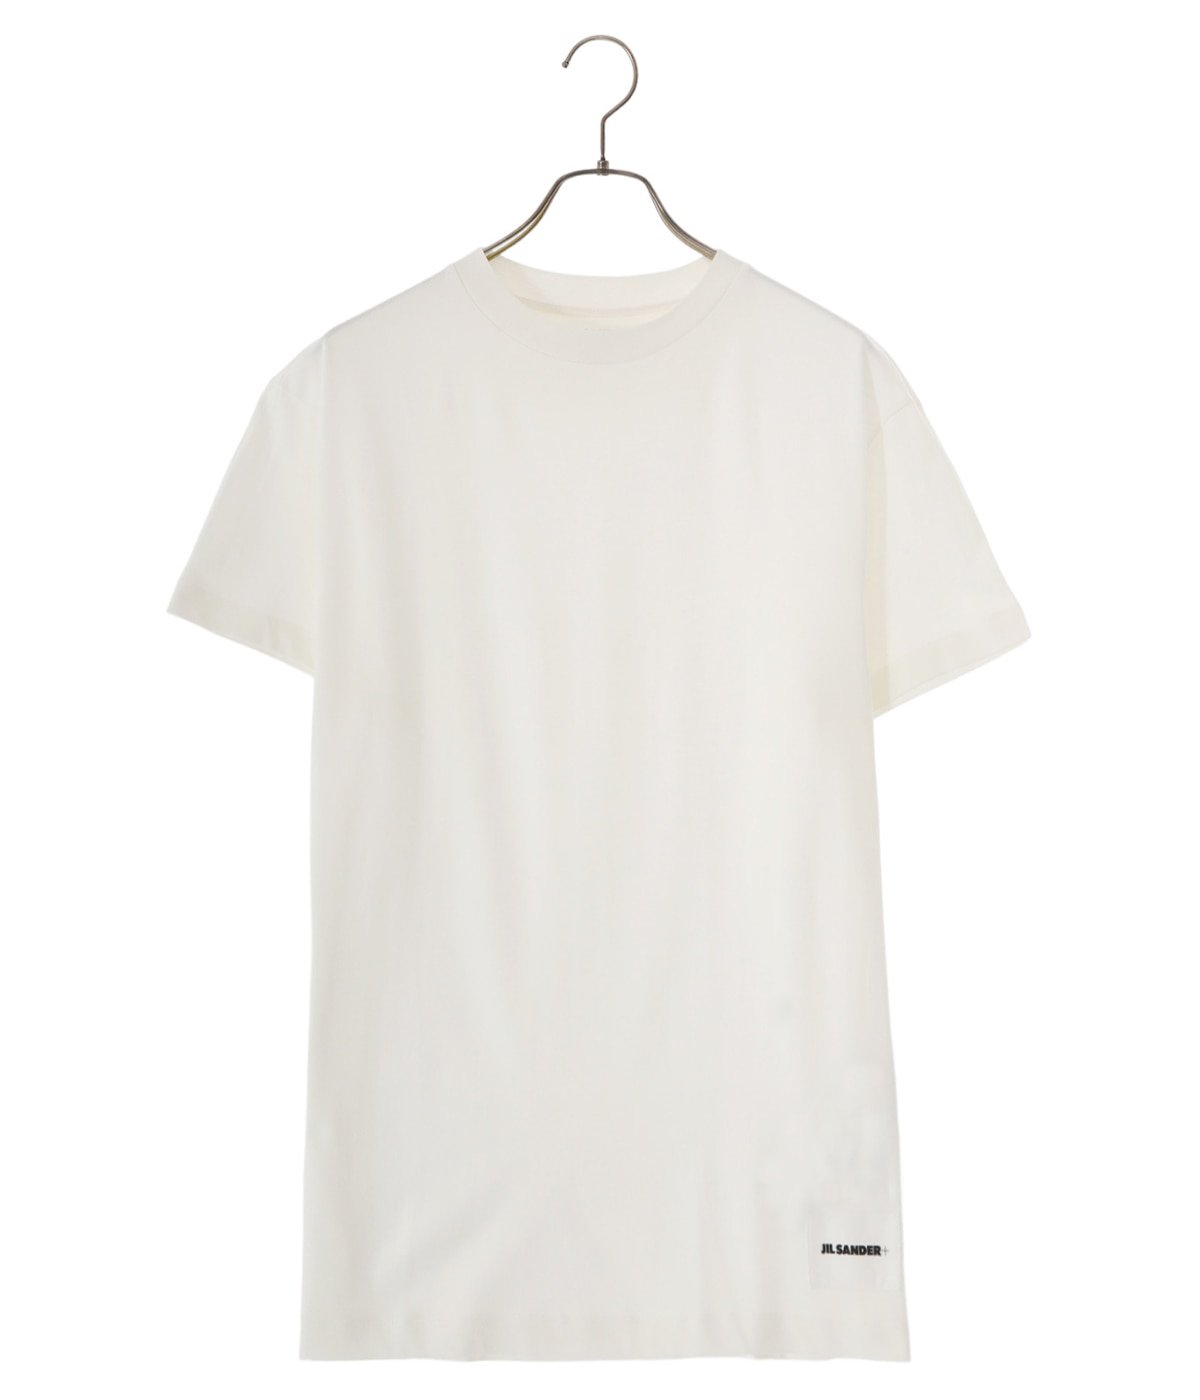 Jil Sander+ 3-Pack Tee ジルサンダー パック Tシャツ73cm身幅